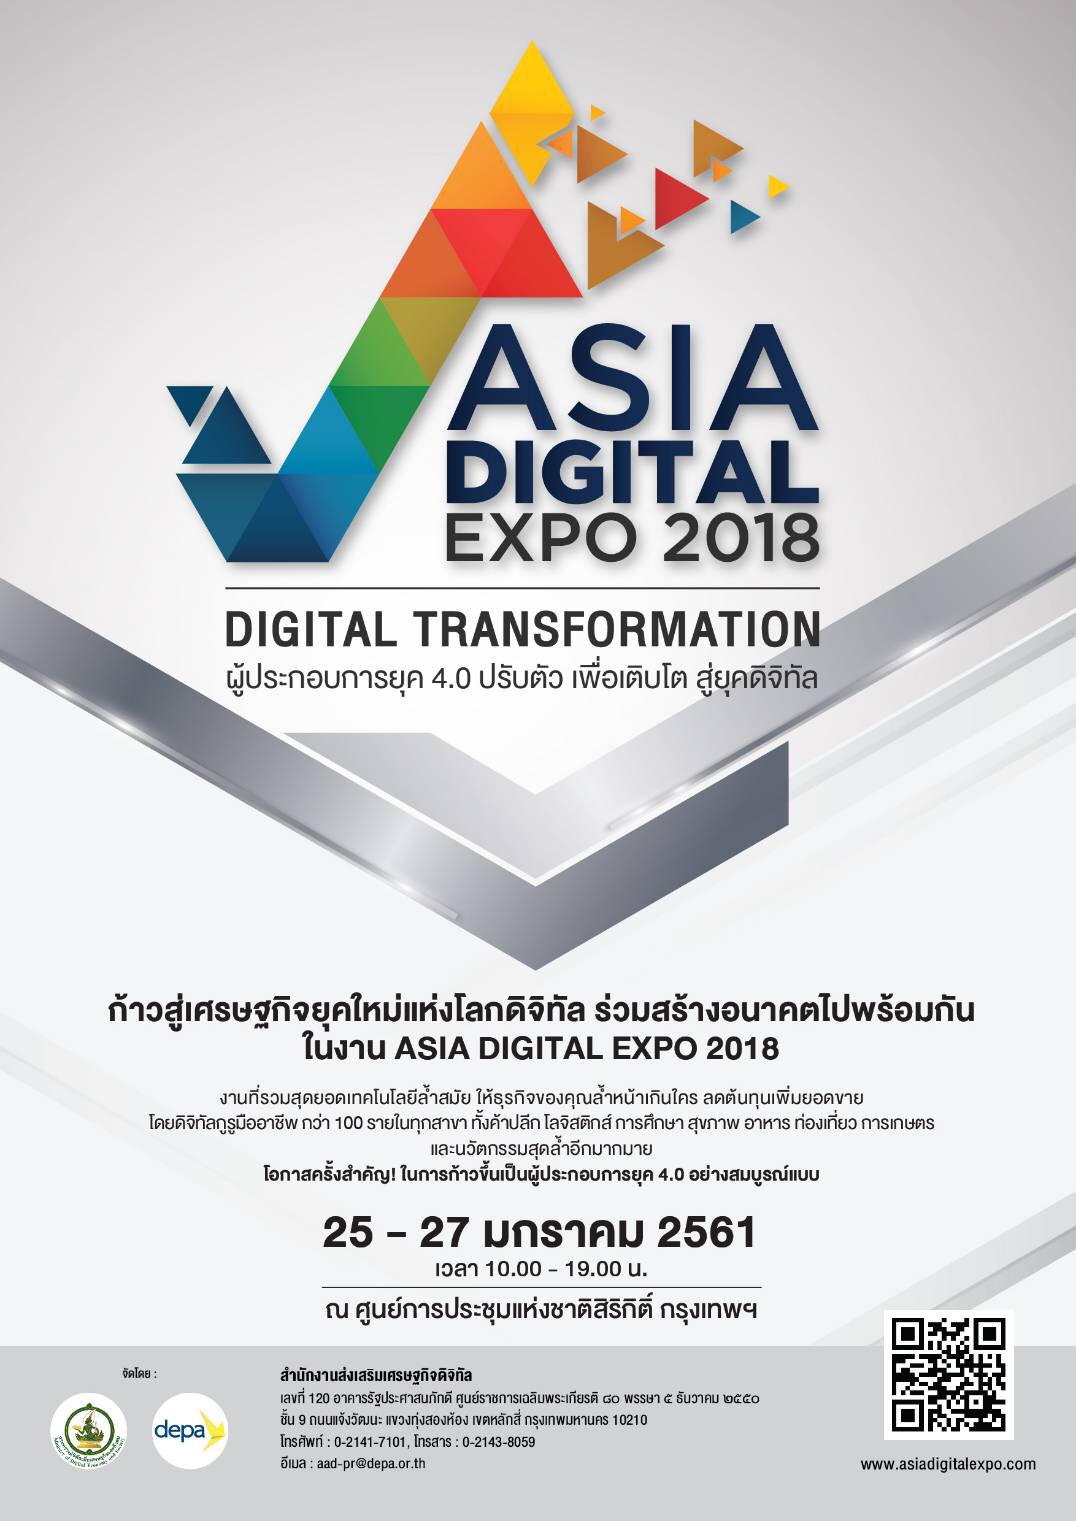 Asia Digital Expo 2018 : Digital Transformation